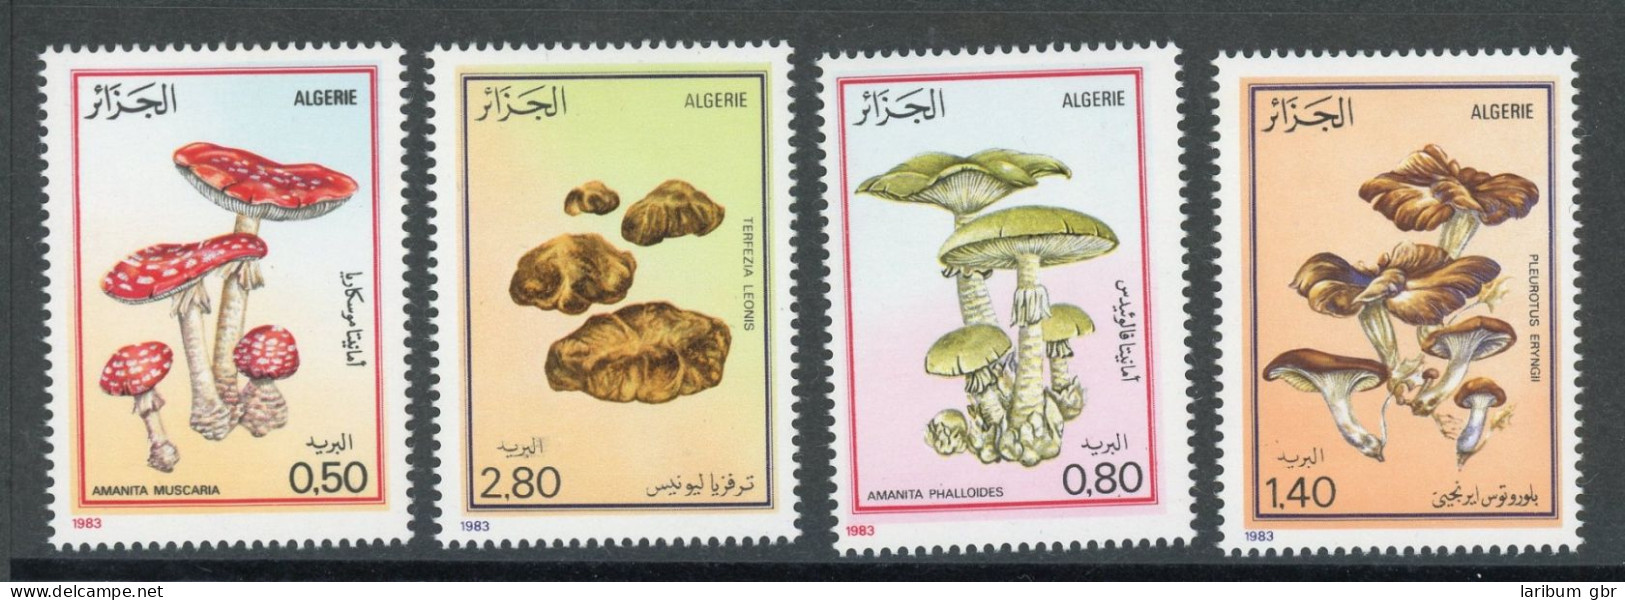 Algerien 827-30 Postfrisch Pilze #HE776 - Algérie (1962-...)